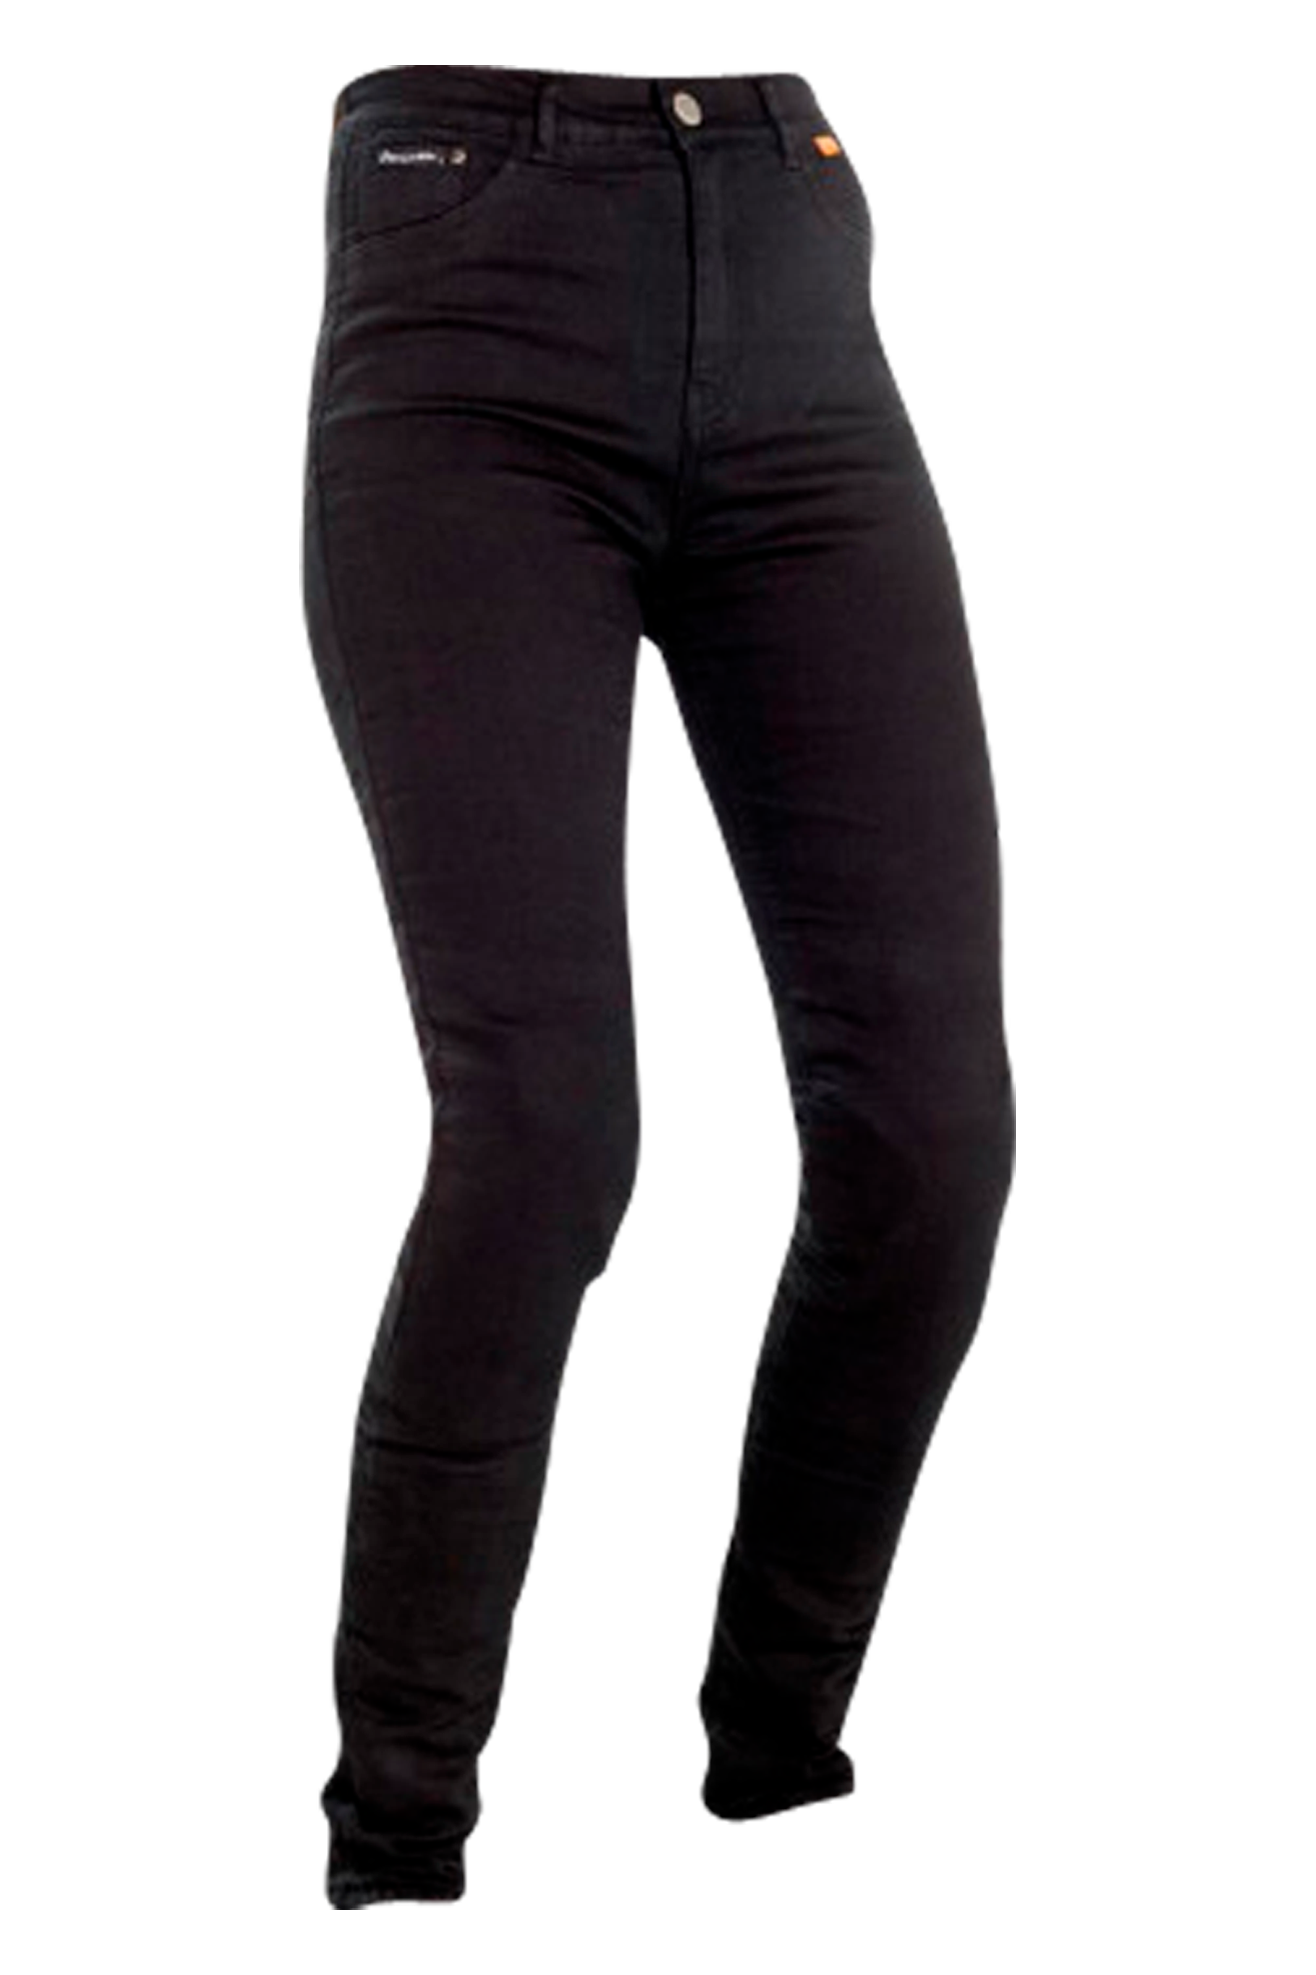 Richa Pantalones de Moto  Jegging Mujer Cortos Negros